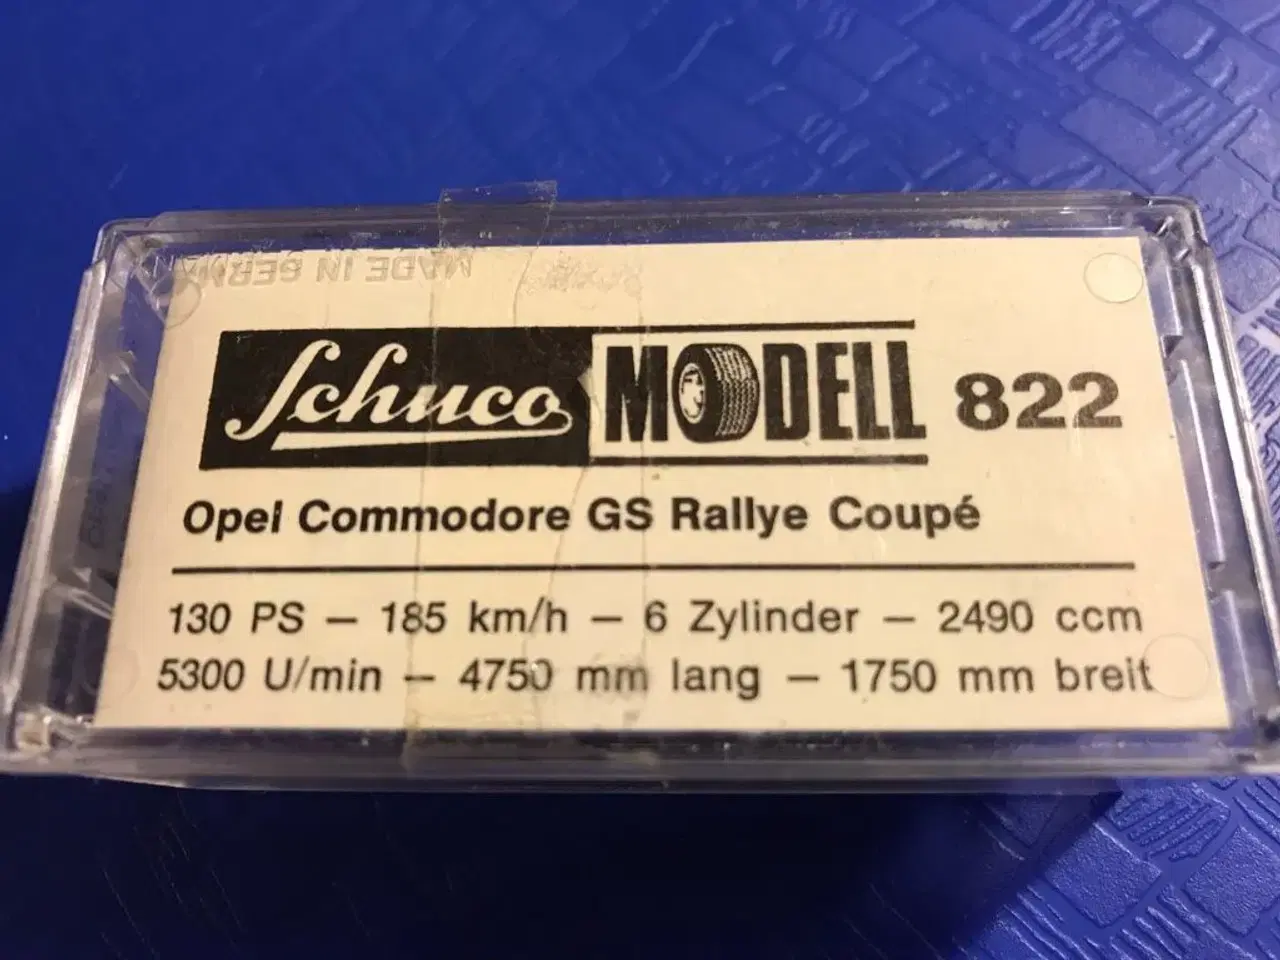 Billede 2 - Schuco Opel Commodore GS Rallye Coupe.